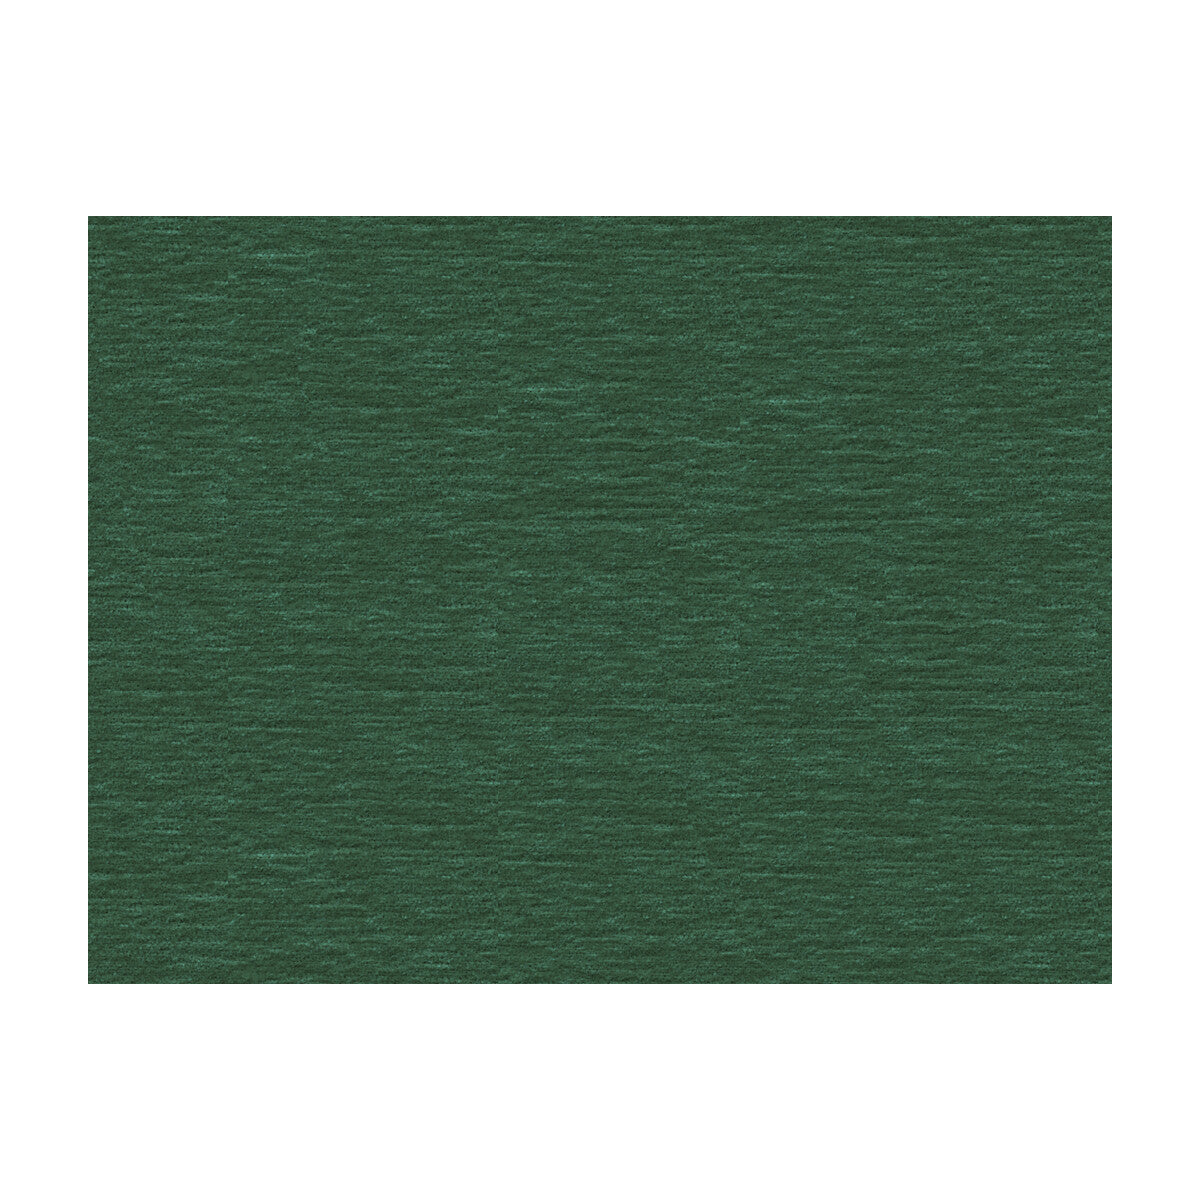 Kravet Smart fabric in 32975-35 color - pattern 32975.35.0 - by Kravet Smart